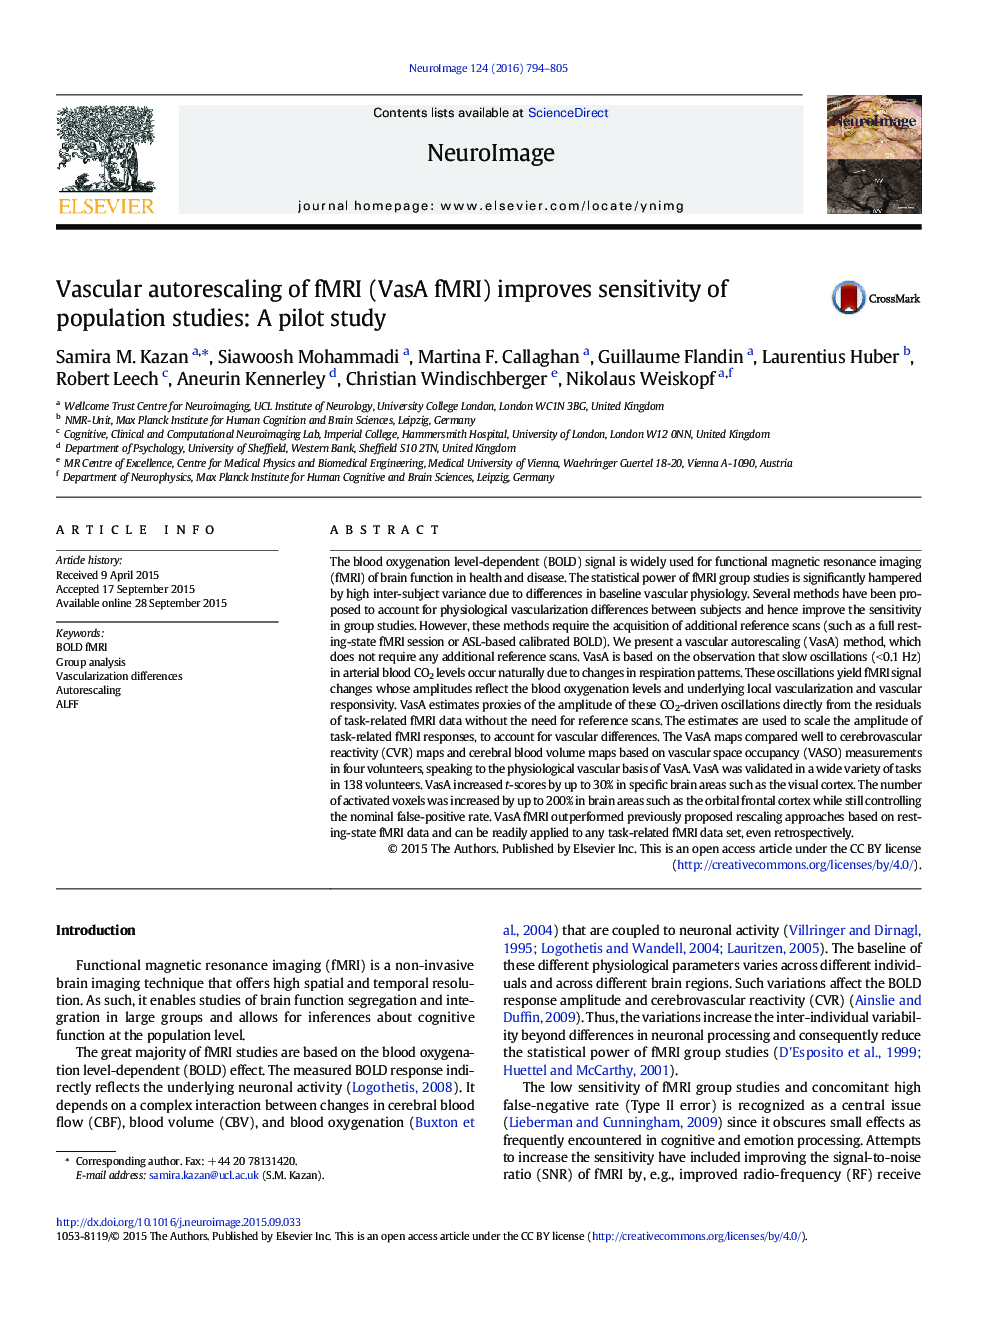 Vascular autorescaling of fMRI (VasA fMRI) improves sensitivity of population studies: A pilot study